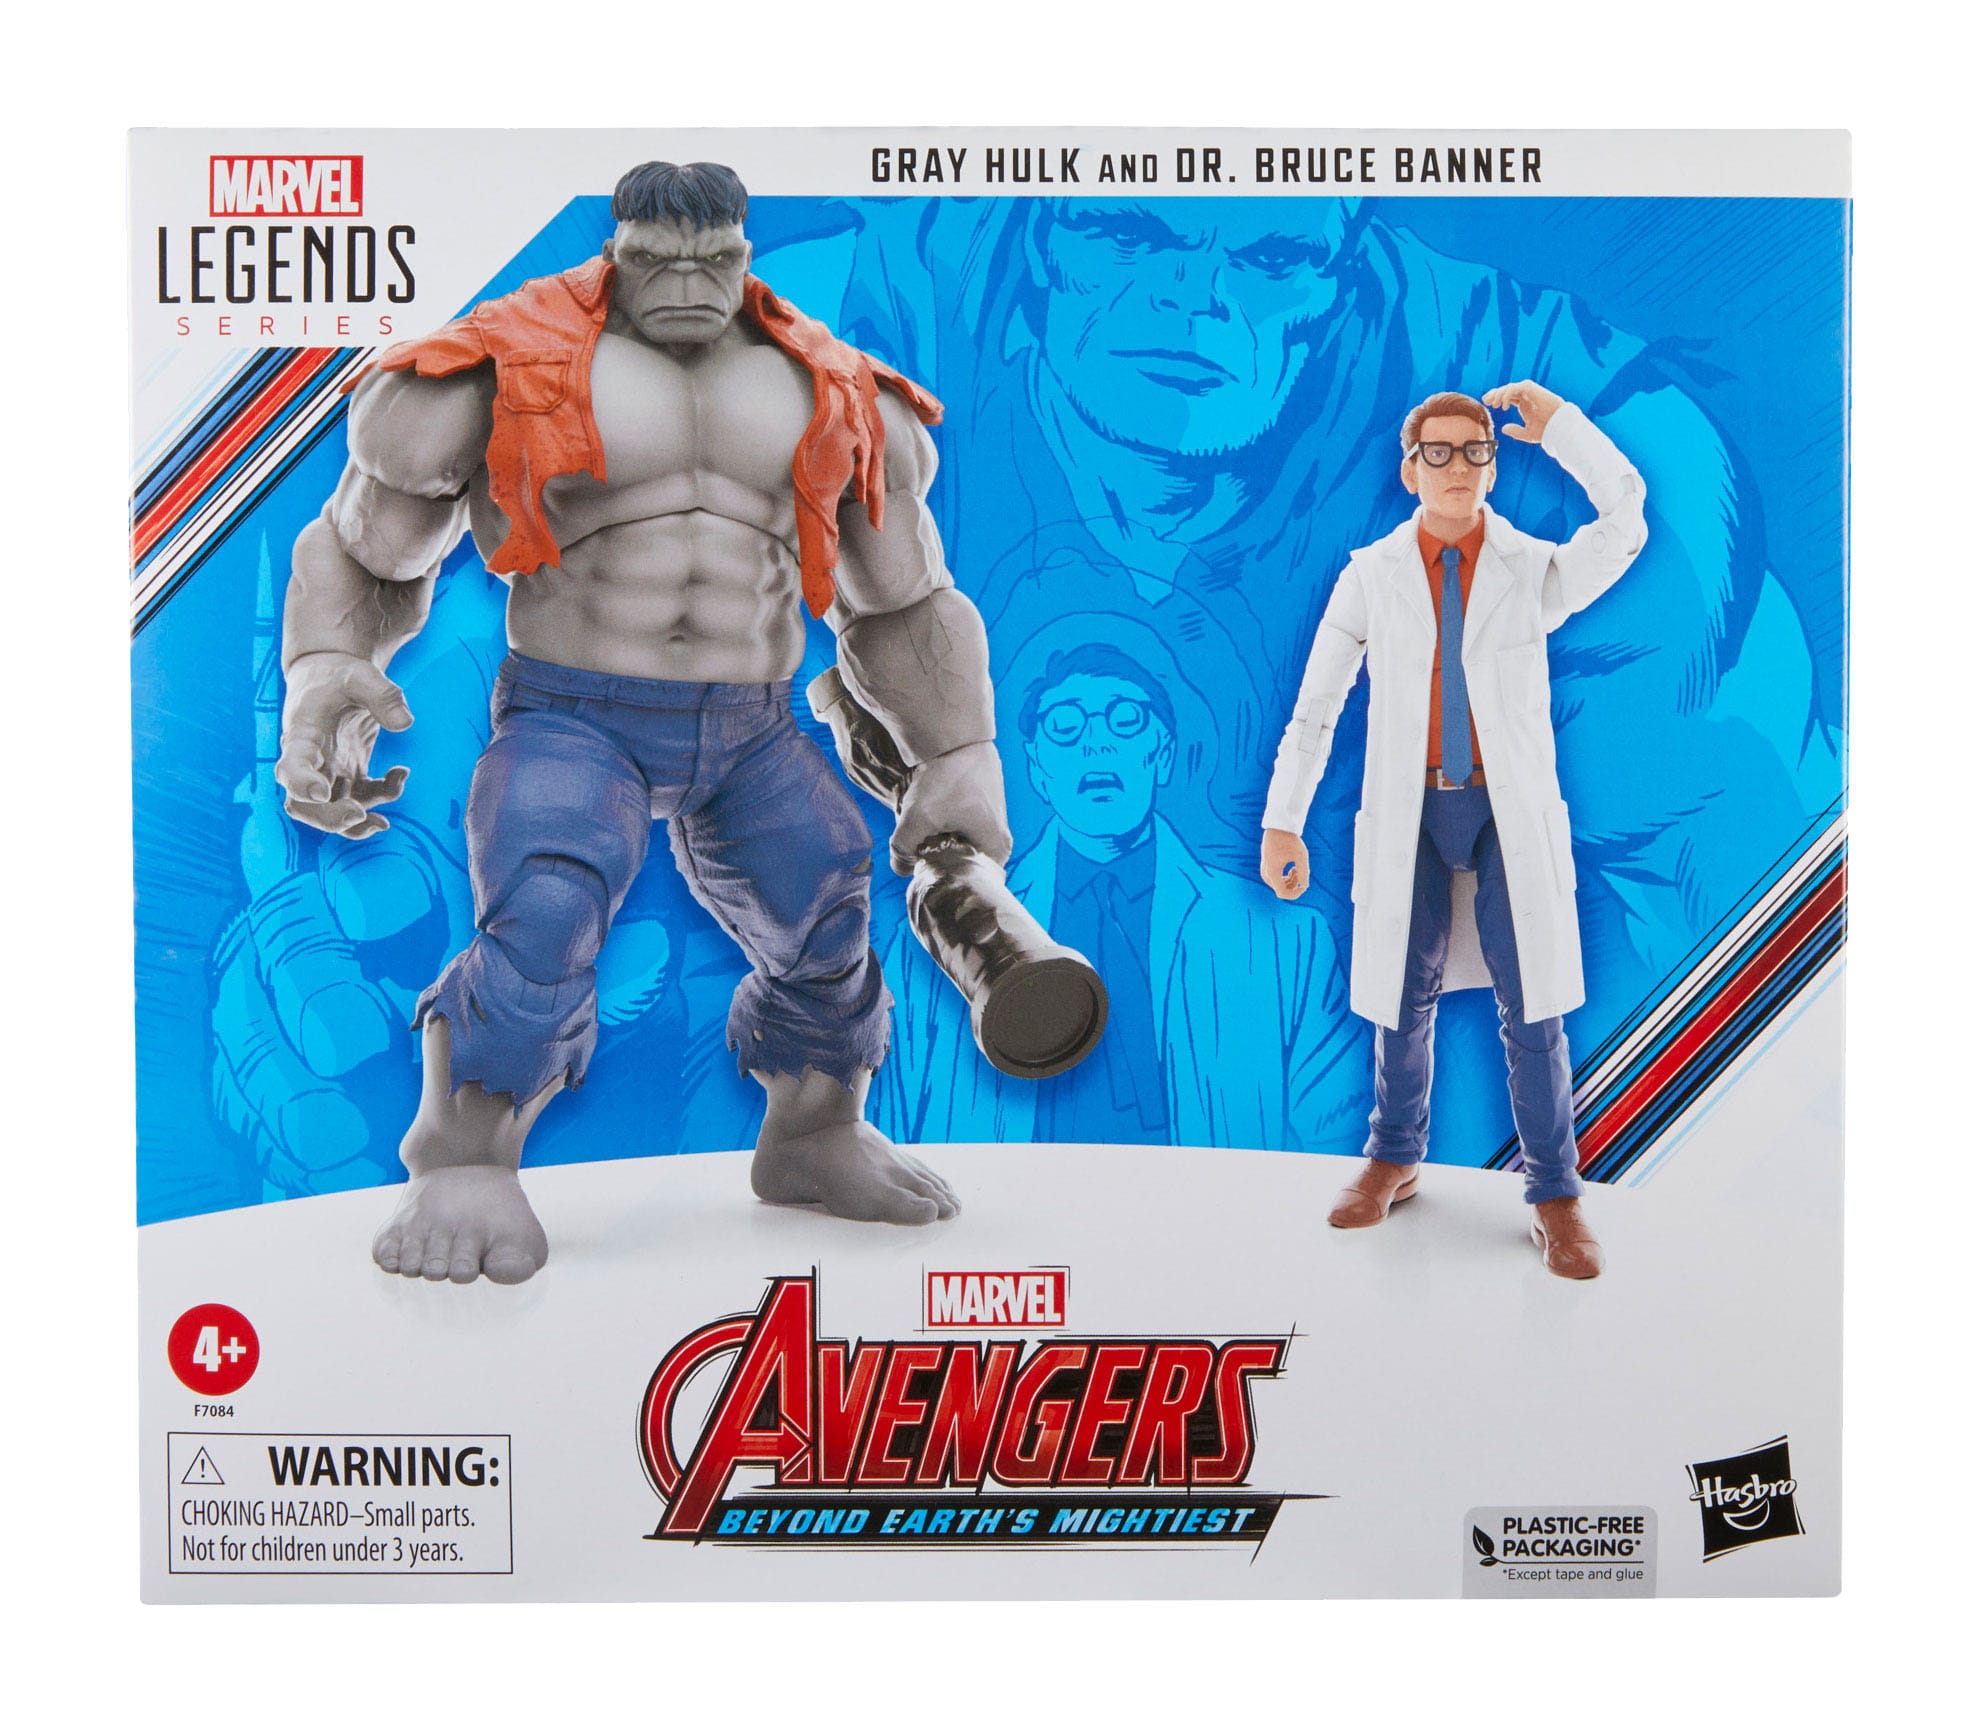 Avengers Beyond Earth's Mightiest Marvel Legends Actionfiguren Gray Hulk & Dr. Bruce Banner 15 cm F70845L0 5010996142597